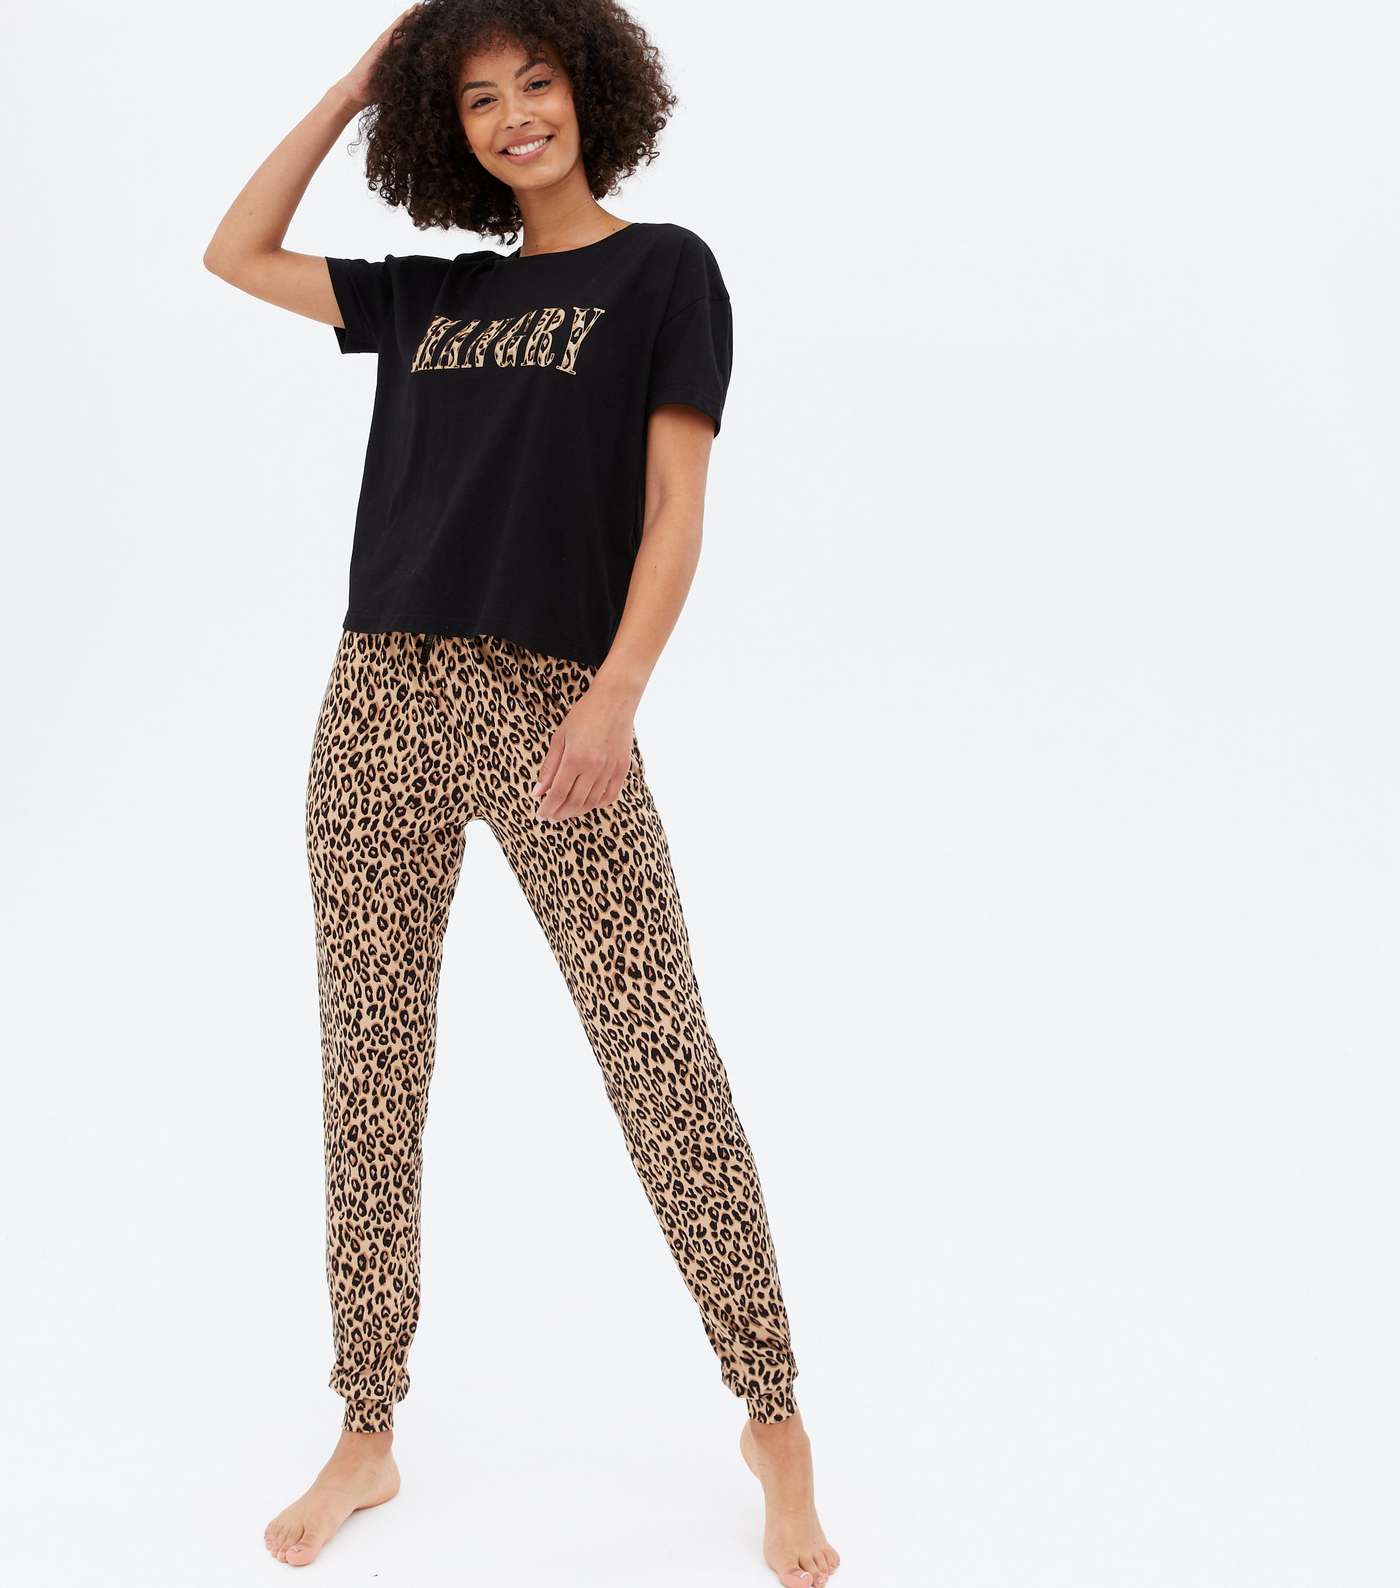 Tall Black Leopard Print Jogger Pyjama Set with Hangry Logo Image 2